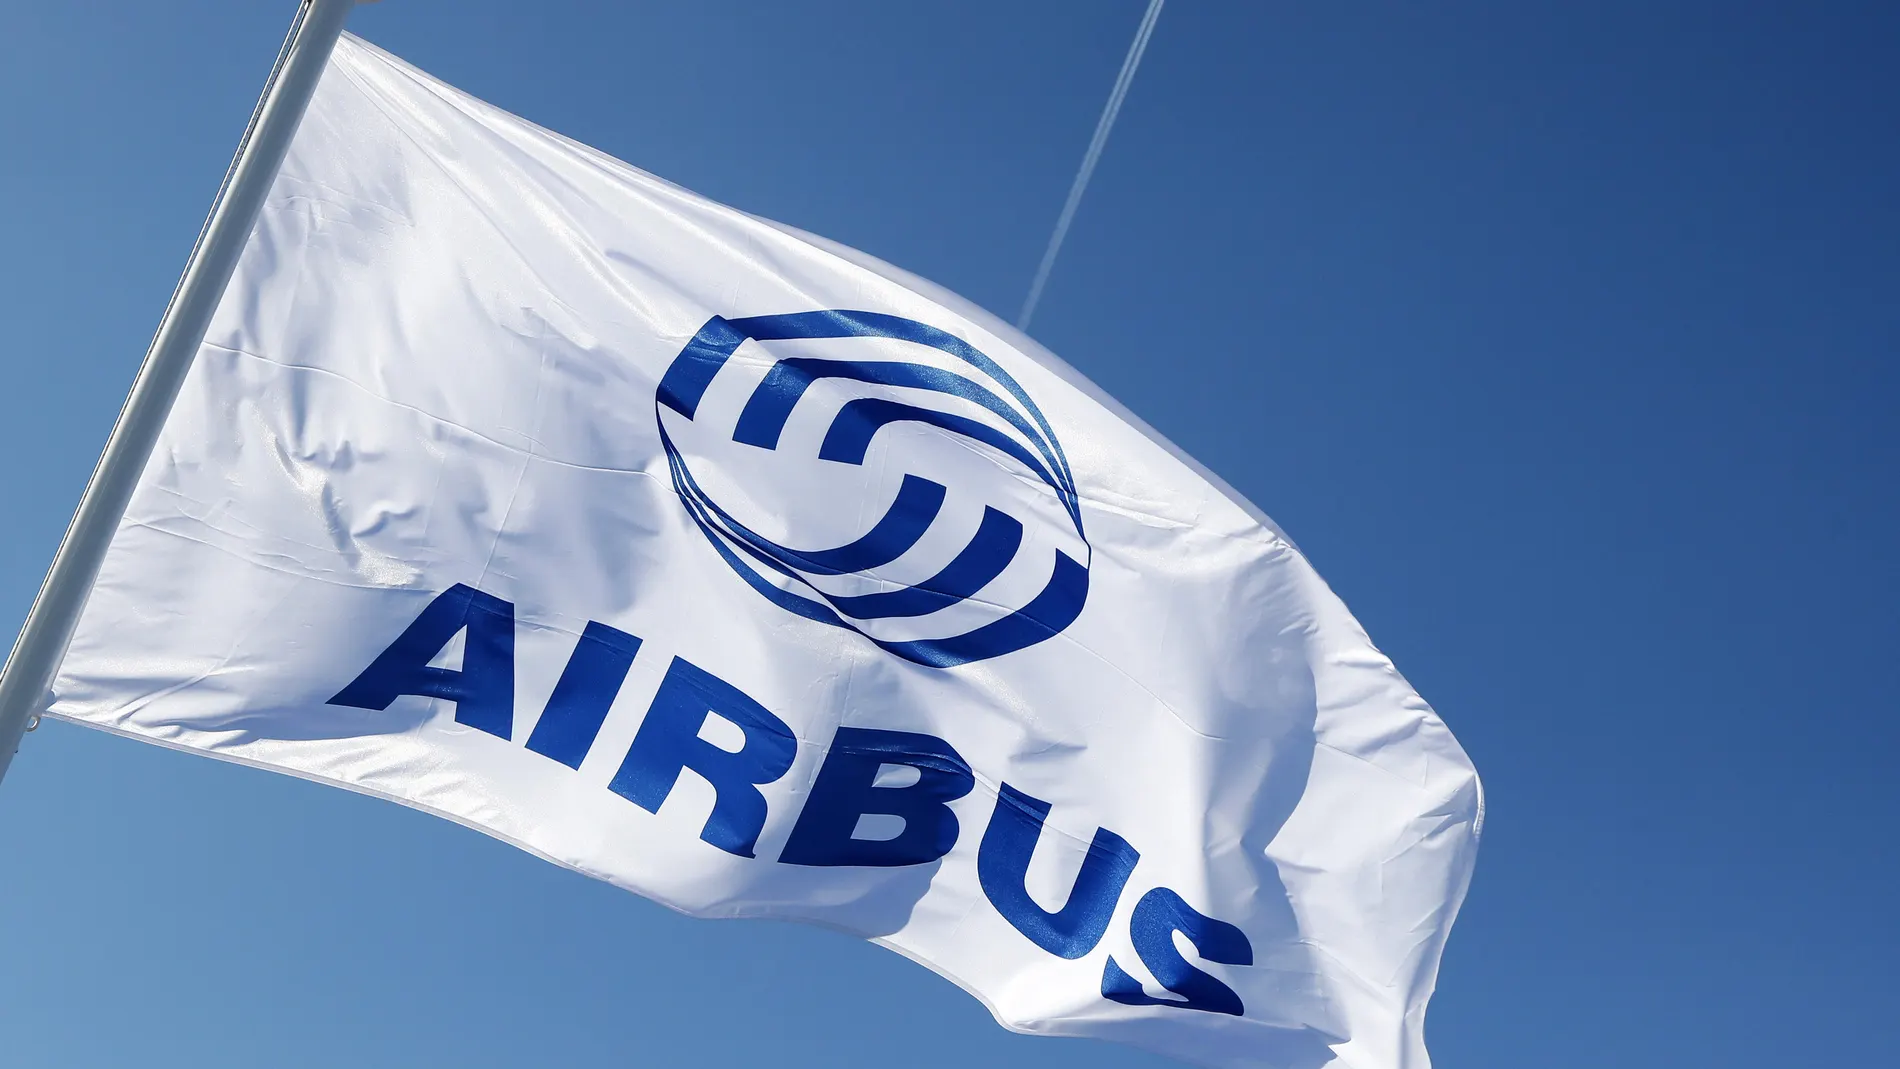 Airbus loses money due to on going Coronavirus, Covid-19 pandemic